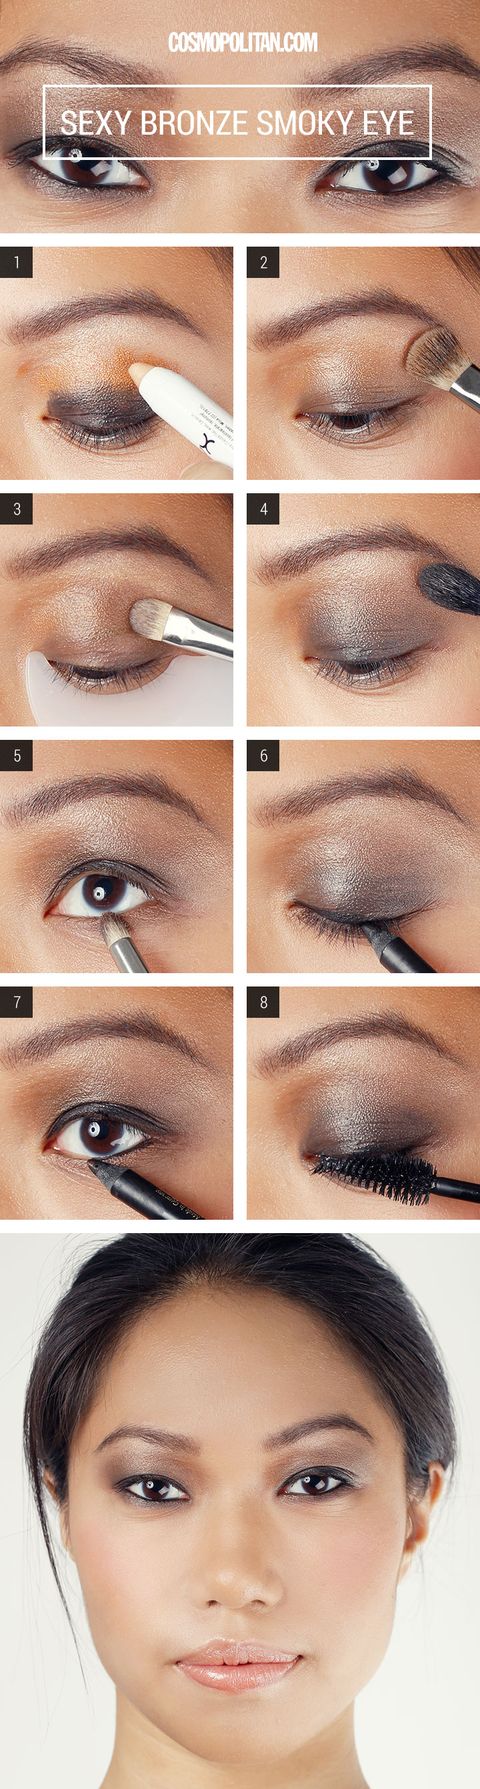 Bronze Smoky Eye Makeup How To Smoky Eye Makeup Tutorial